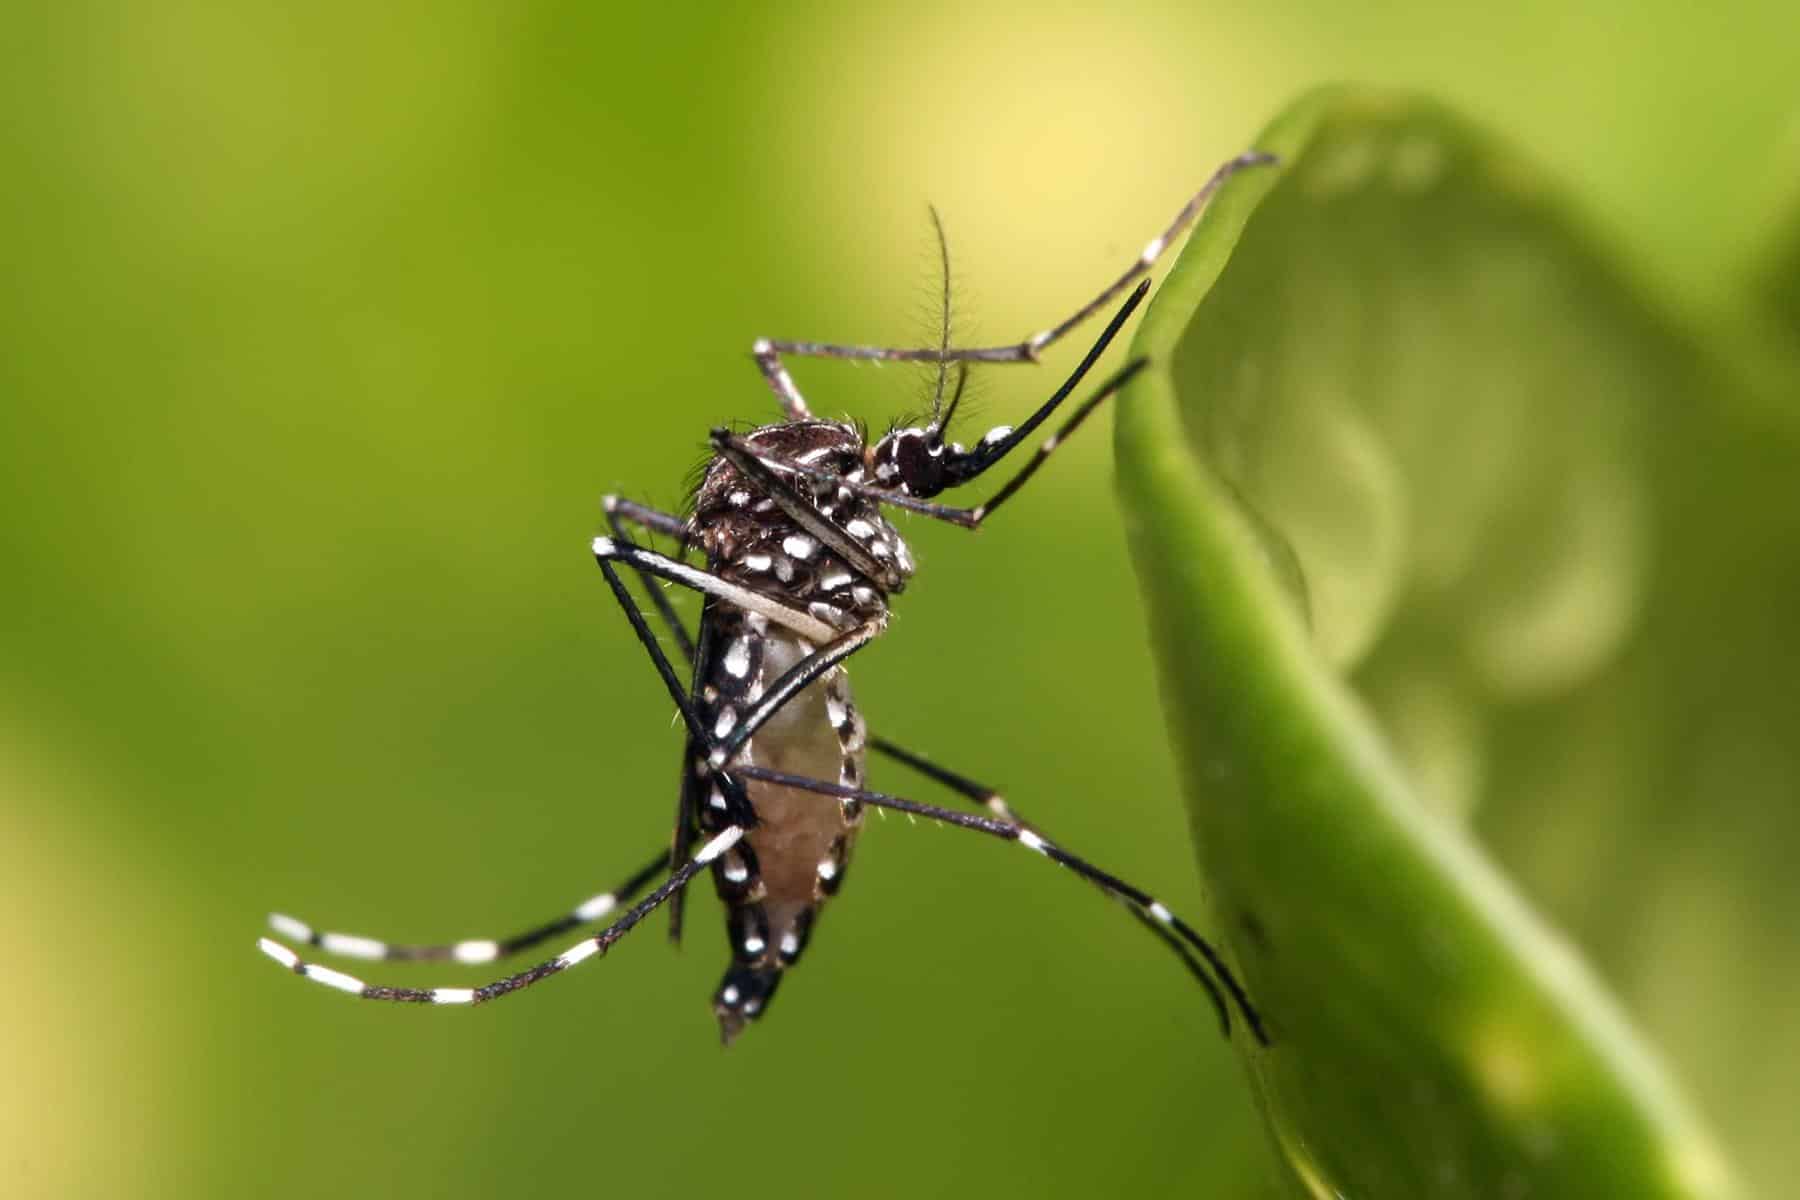 Dengue mosquito resting